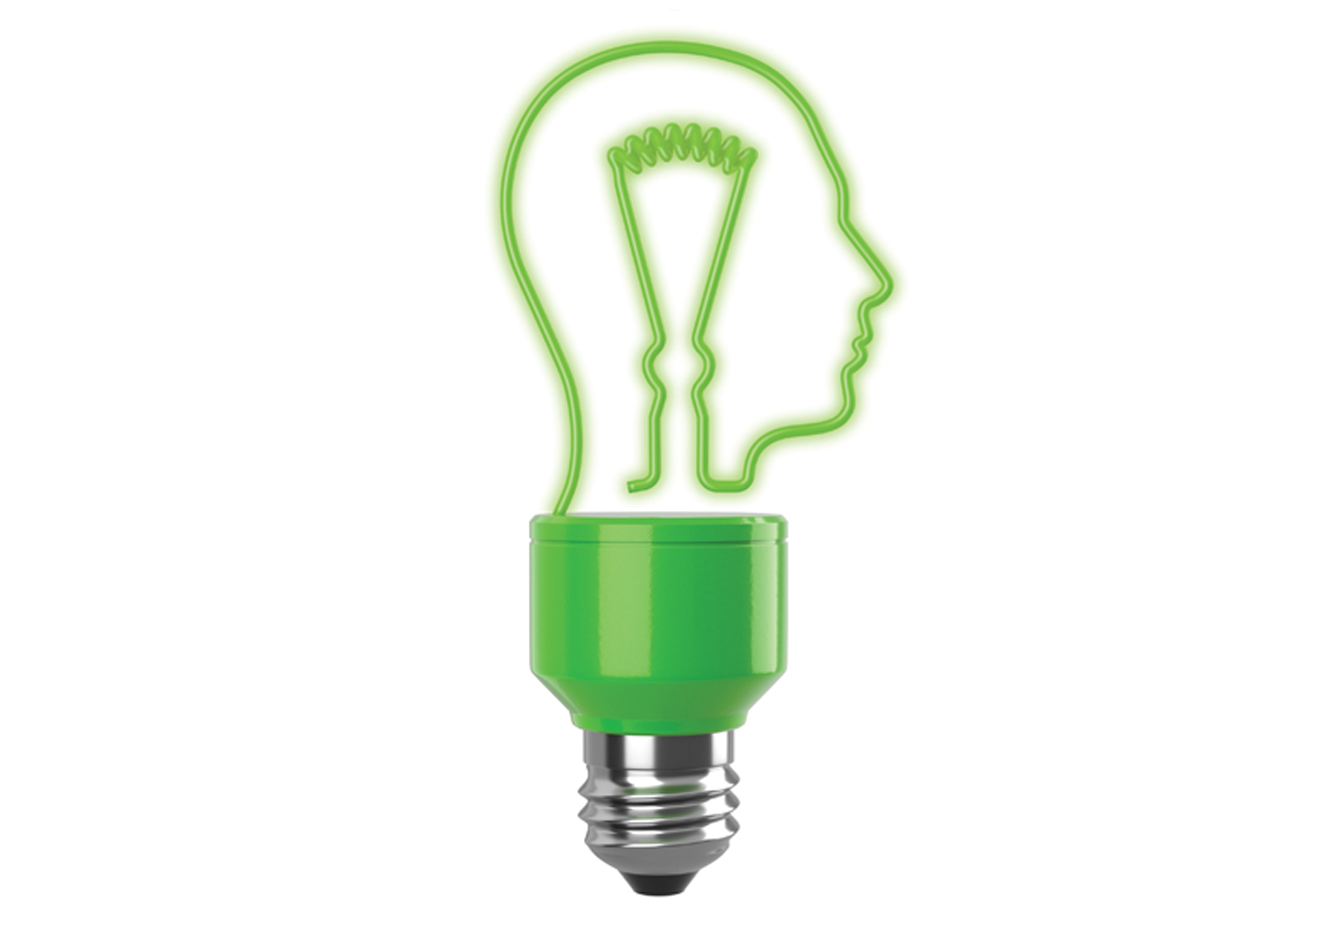 Luz LED verde contra el dolor de cabeza - efectoLED blog